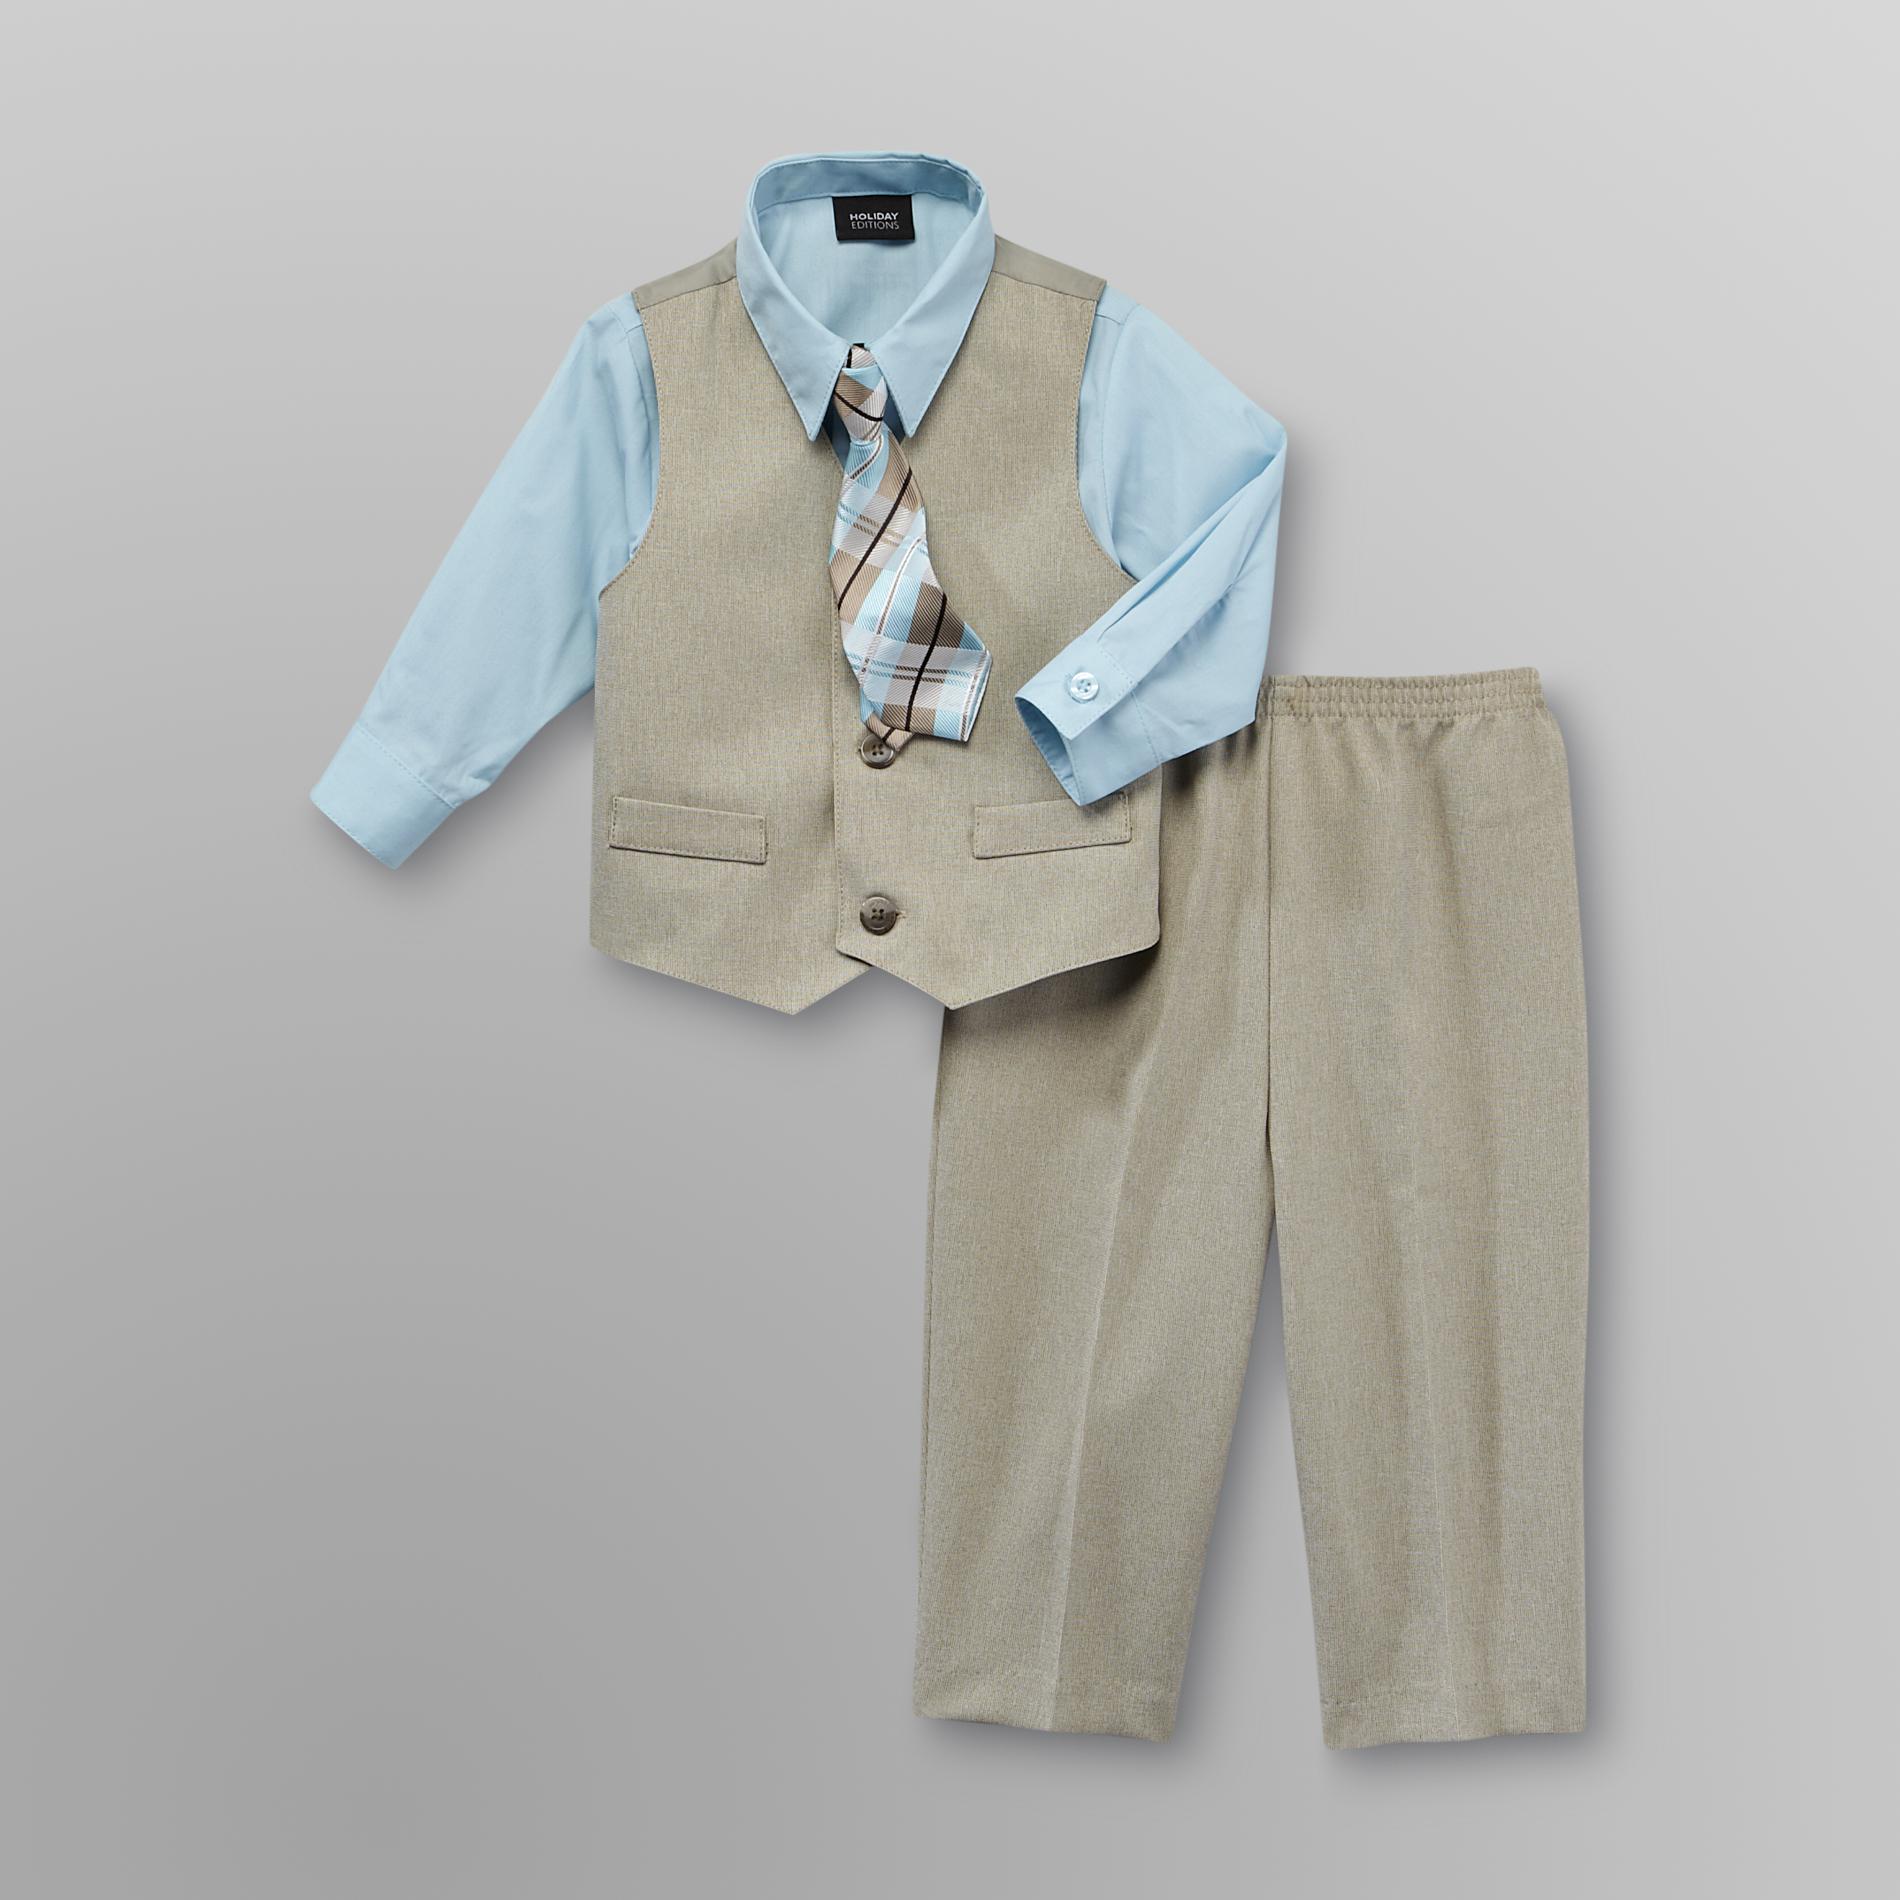 Holiday Editions Infant & Toddler Boy's Vest  Dress Shirt  Necktie & Pants